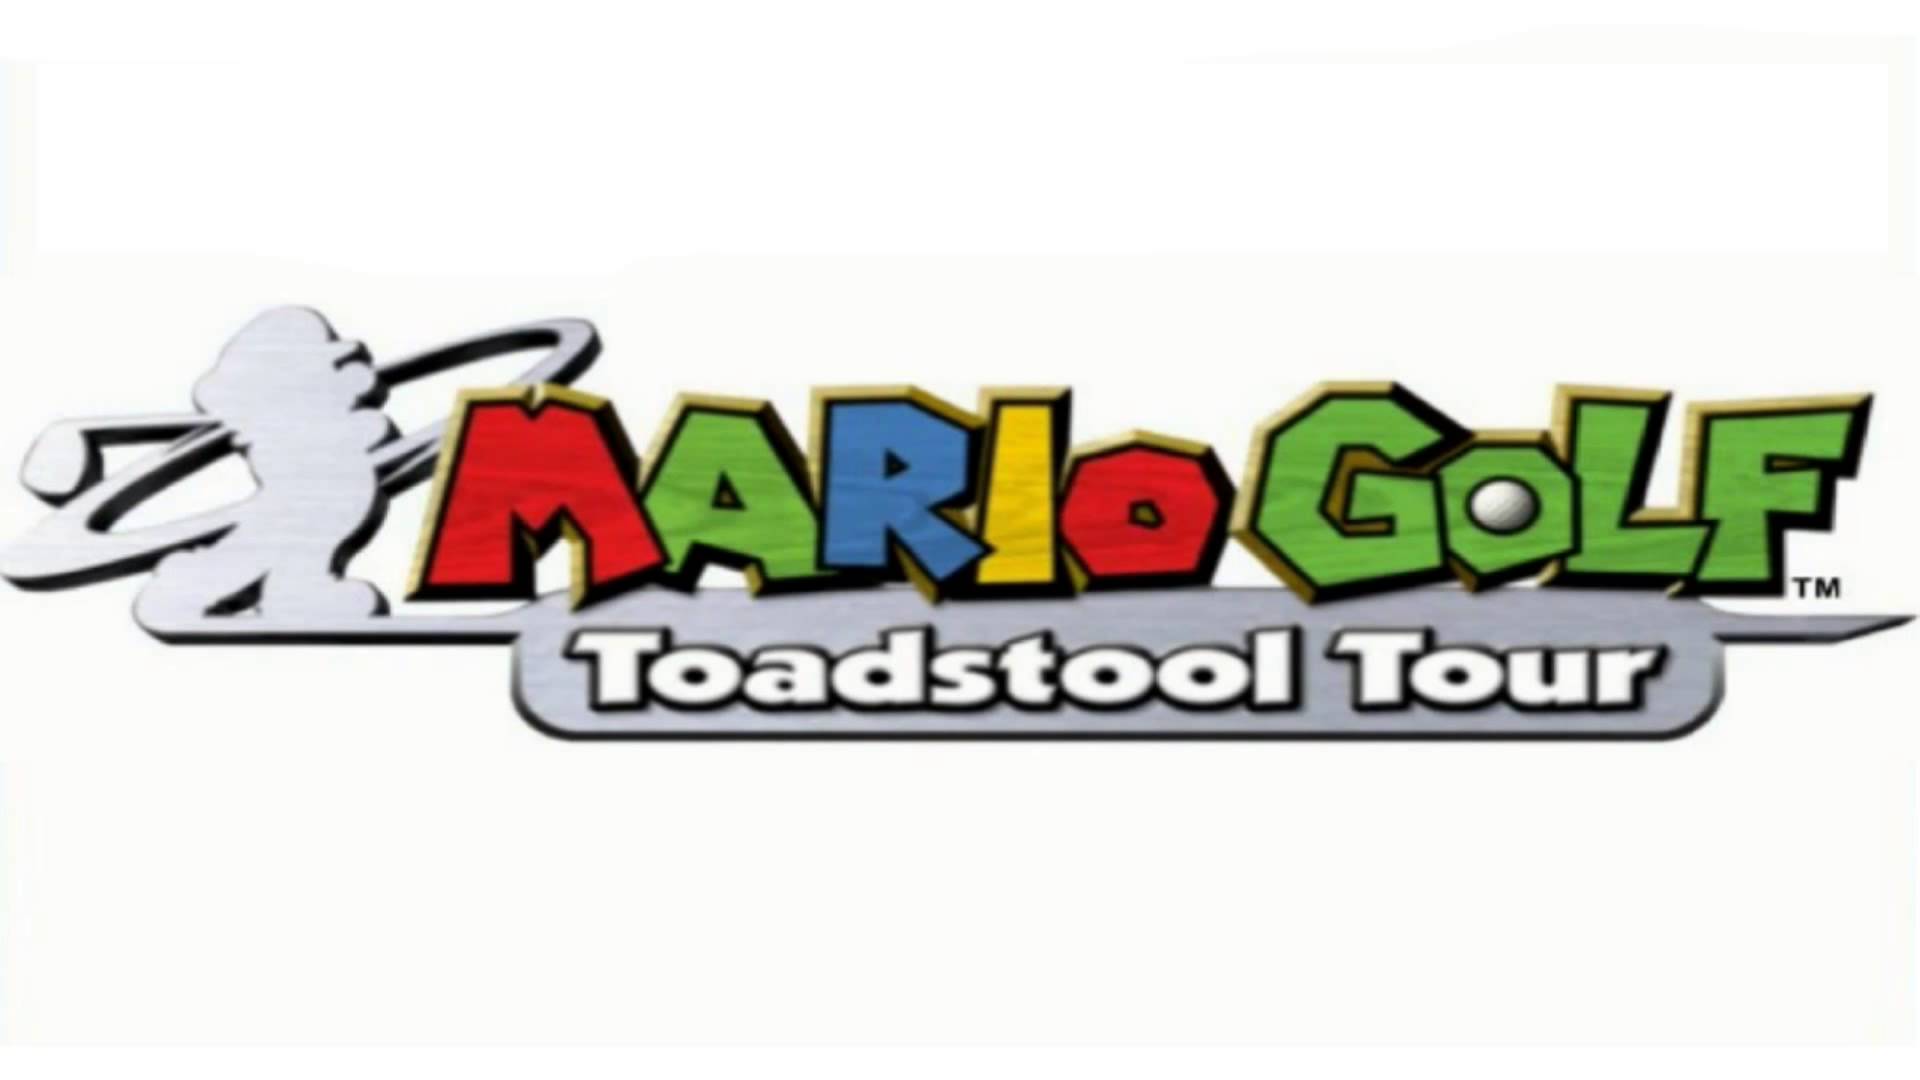 Mario Golf Toadstool Tour Logo - Mario Golf: Toadstool Tour | Logopedia | FANDOM powered by Wikia